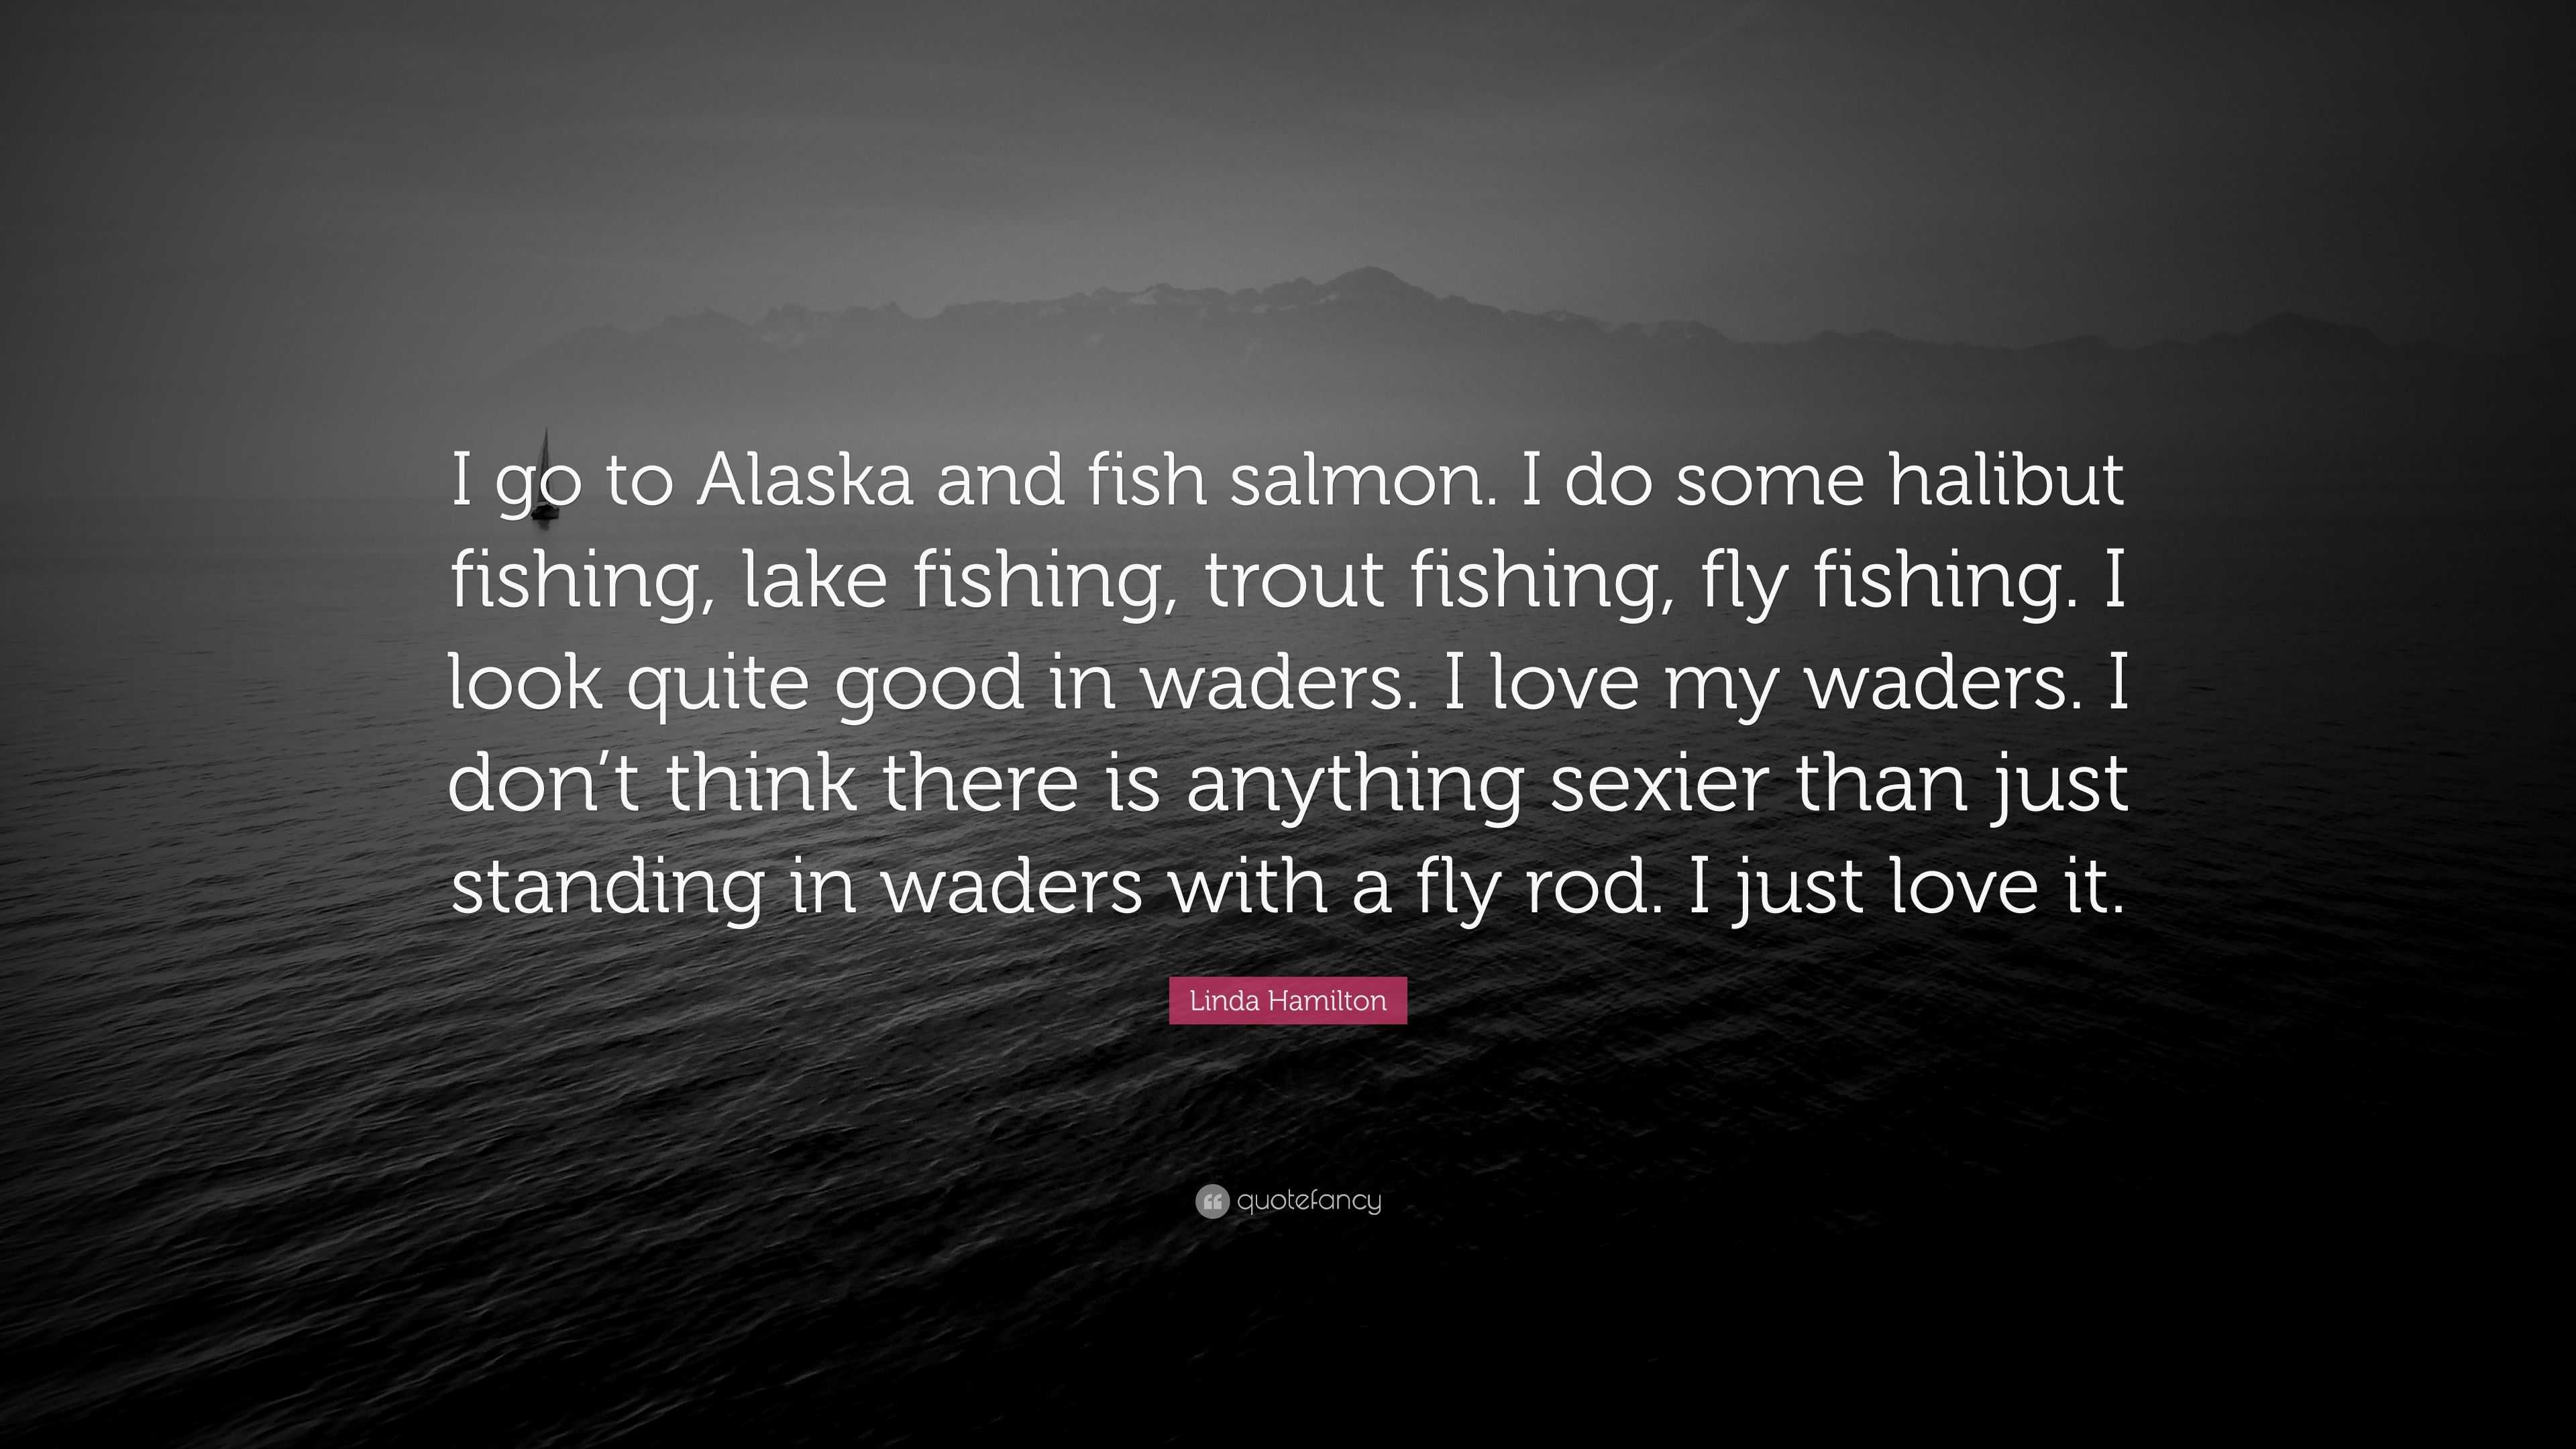 Linda Hamilton Quote: “I go to Alaska and fish salmon. I do some